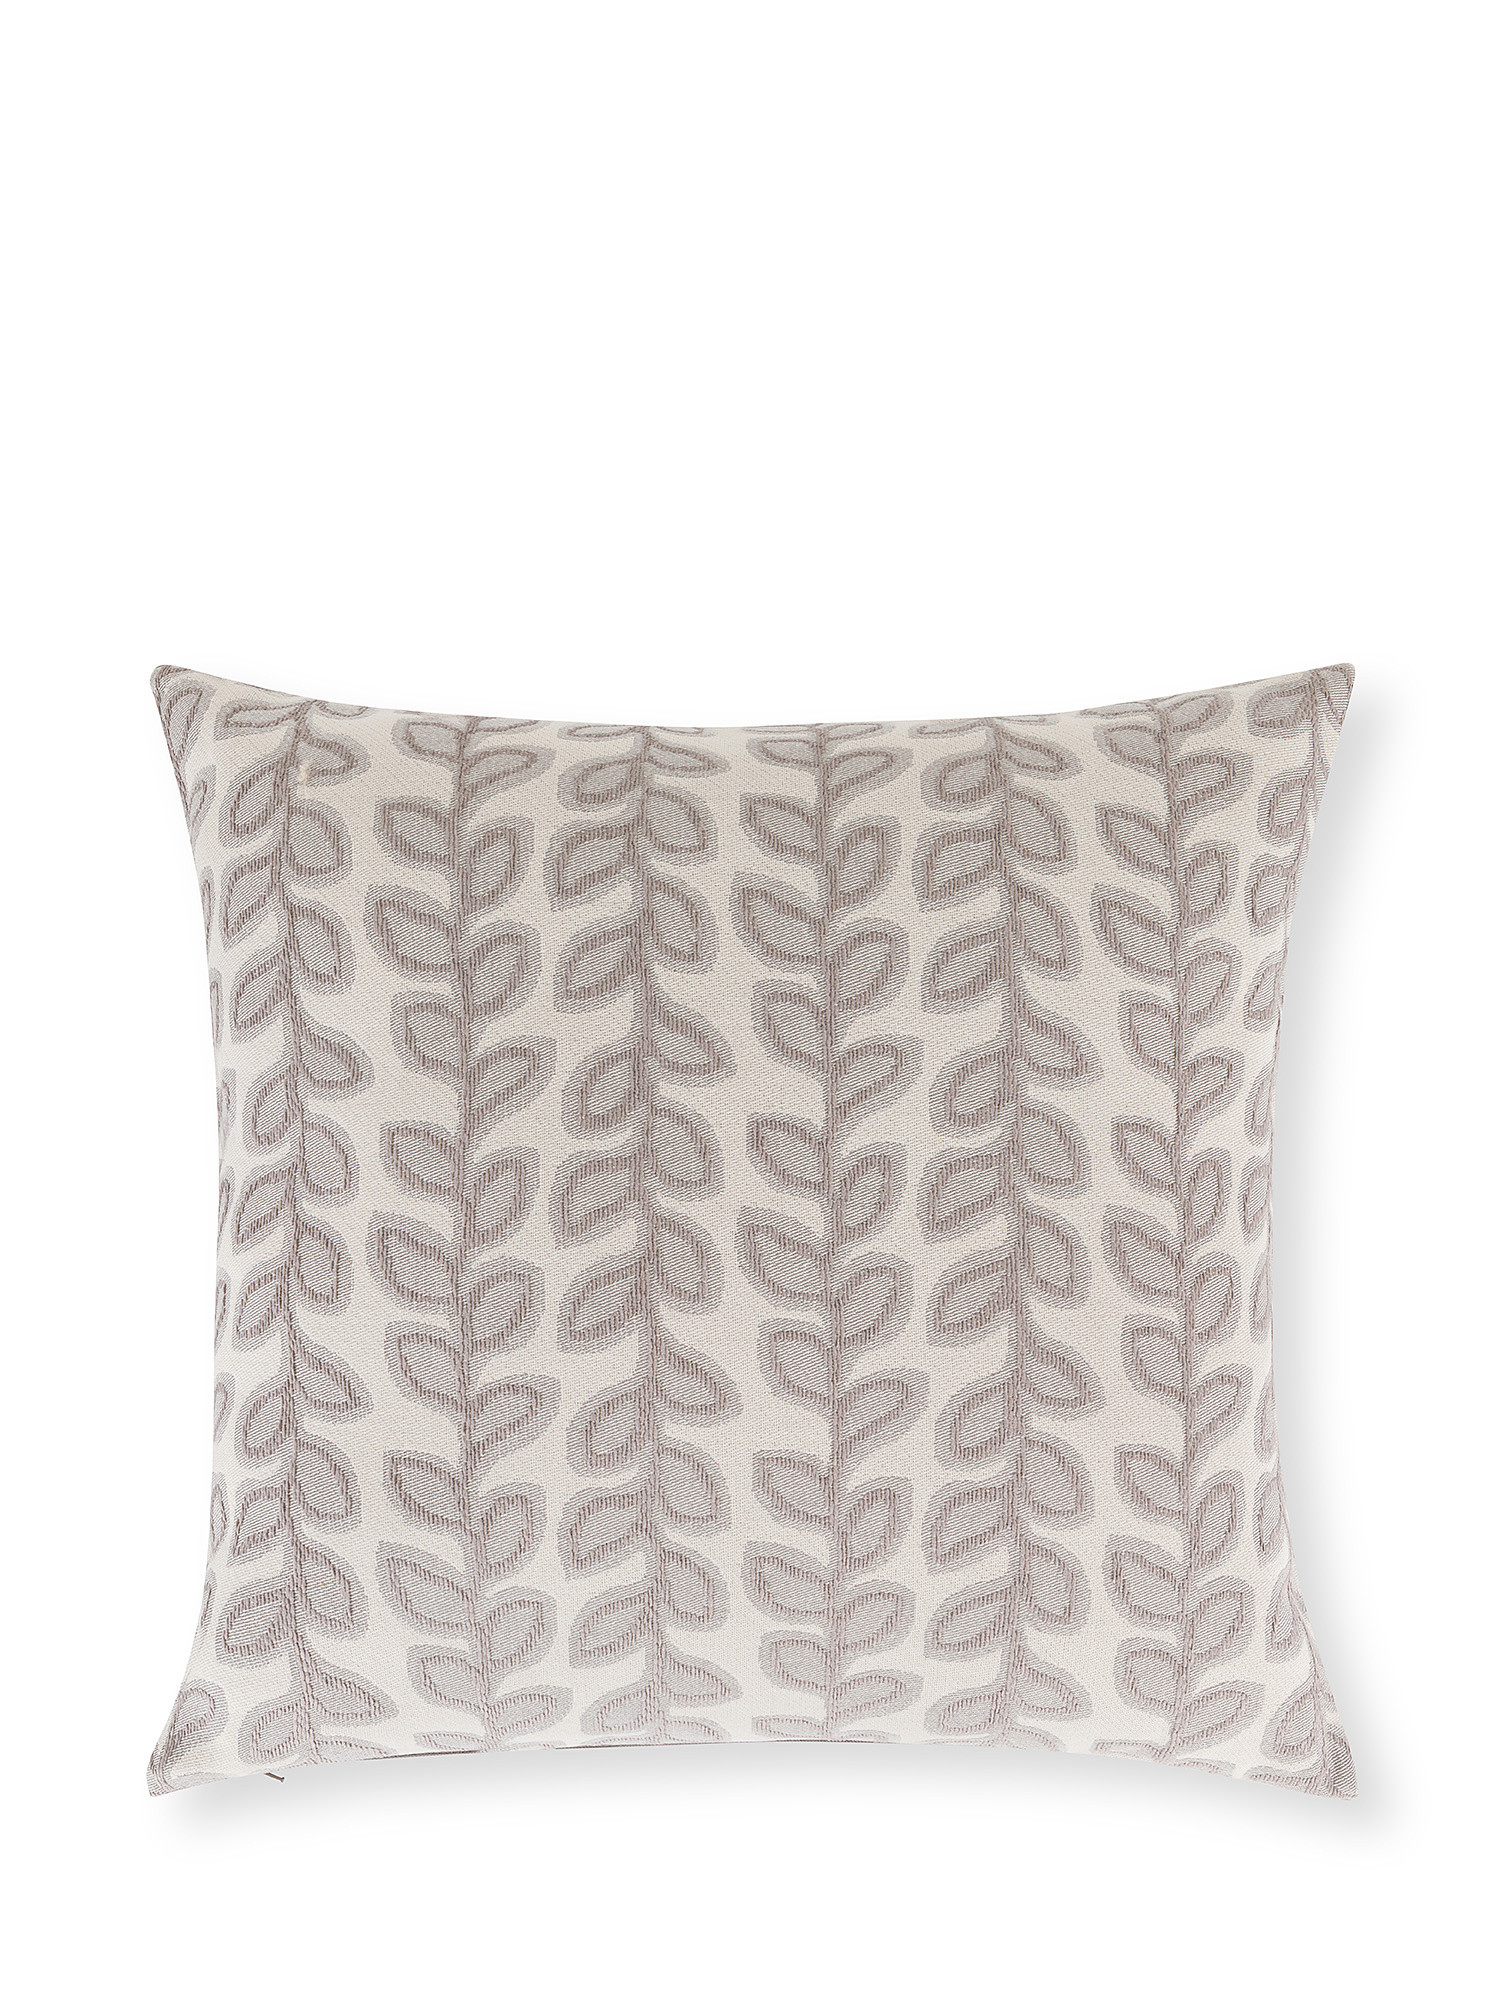 Jacquard cushion with ramage motif 45x45cm, Grey, large image number 0